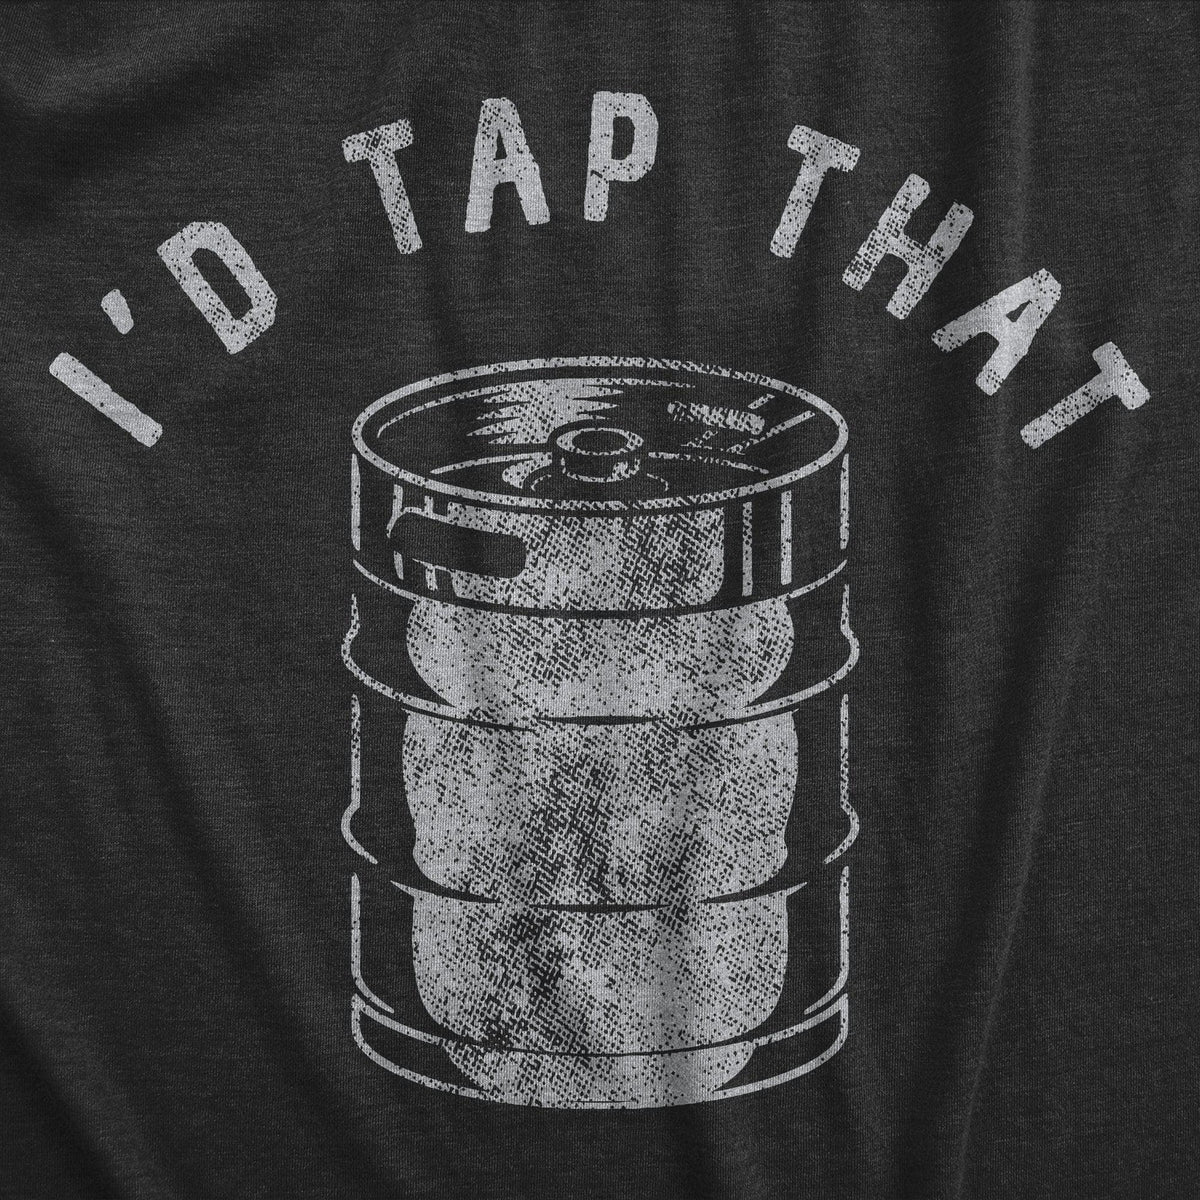 Id Tap That Men&#39;s Tshirt  -  Crazy Dog T-Shirts